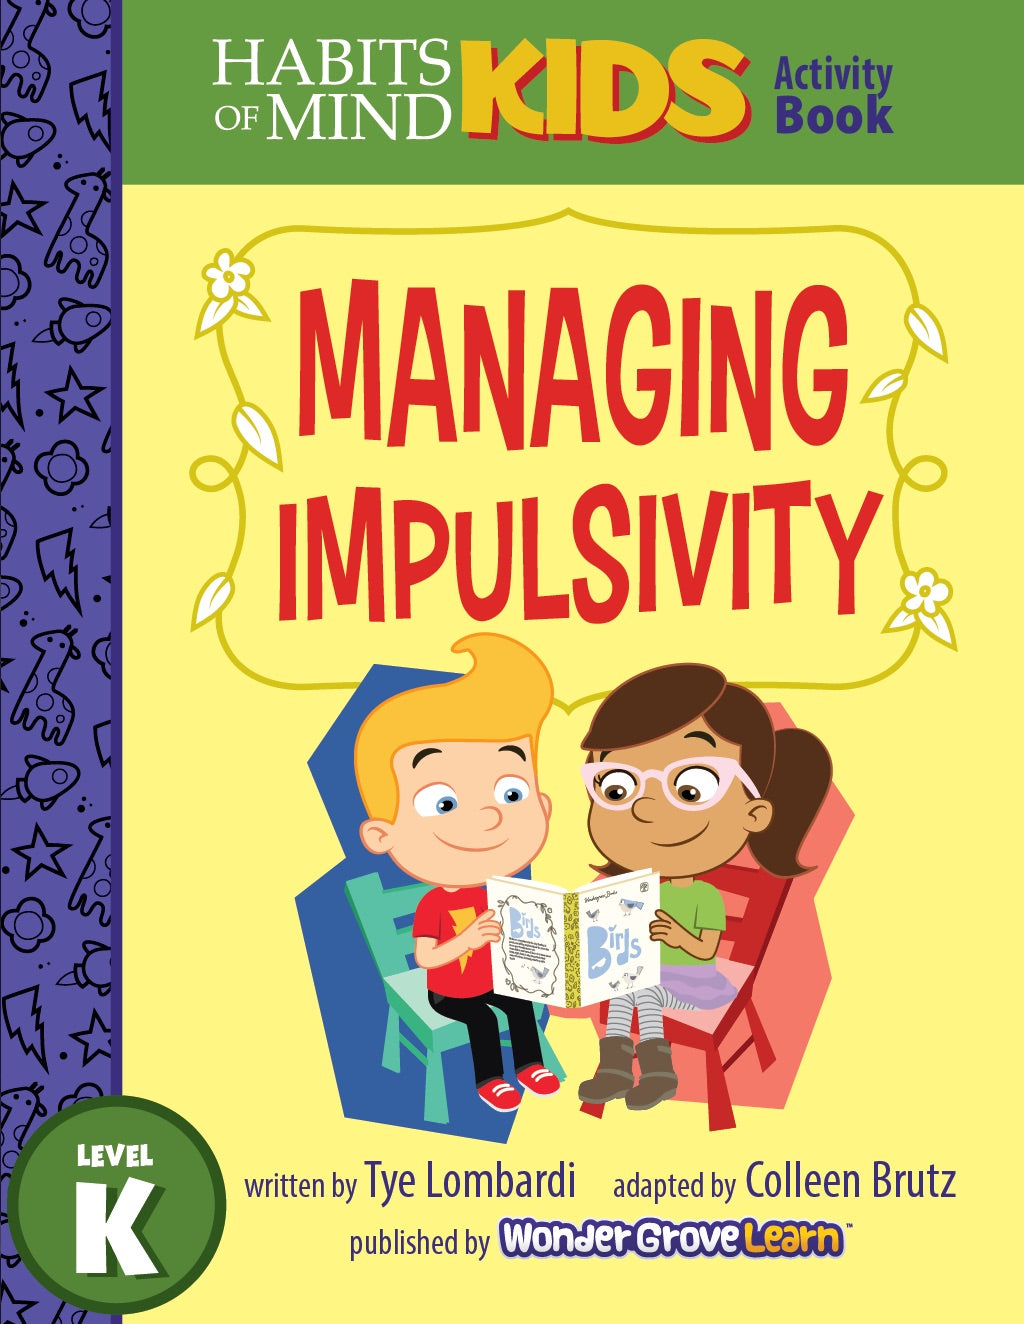 Managing Impulsivity: A Habits of Mind Story for Kindergarten